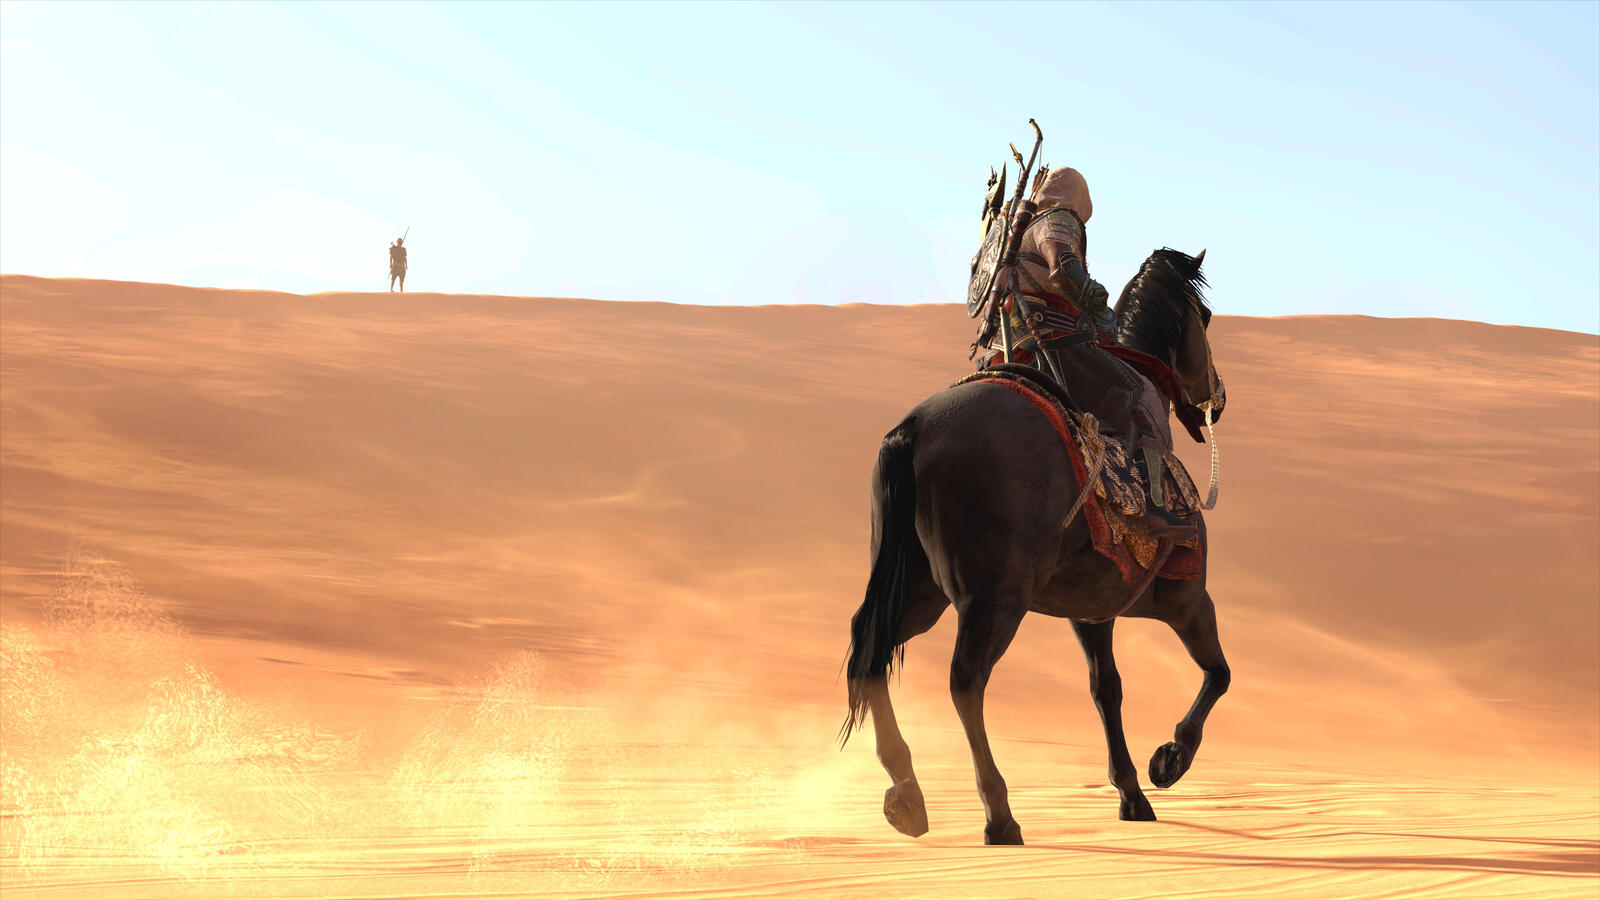 Wallpapers assassins creed origins games horse on the desktop